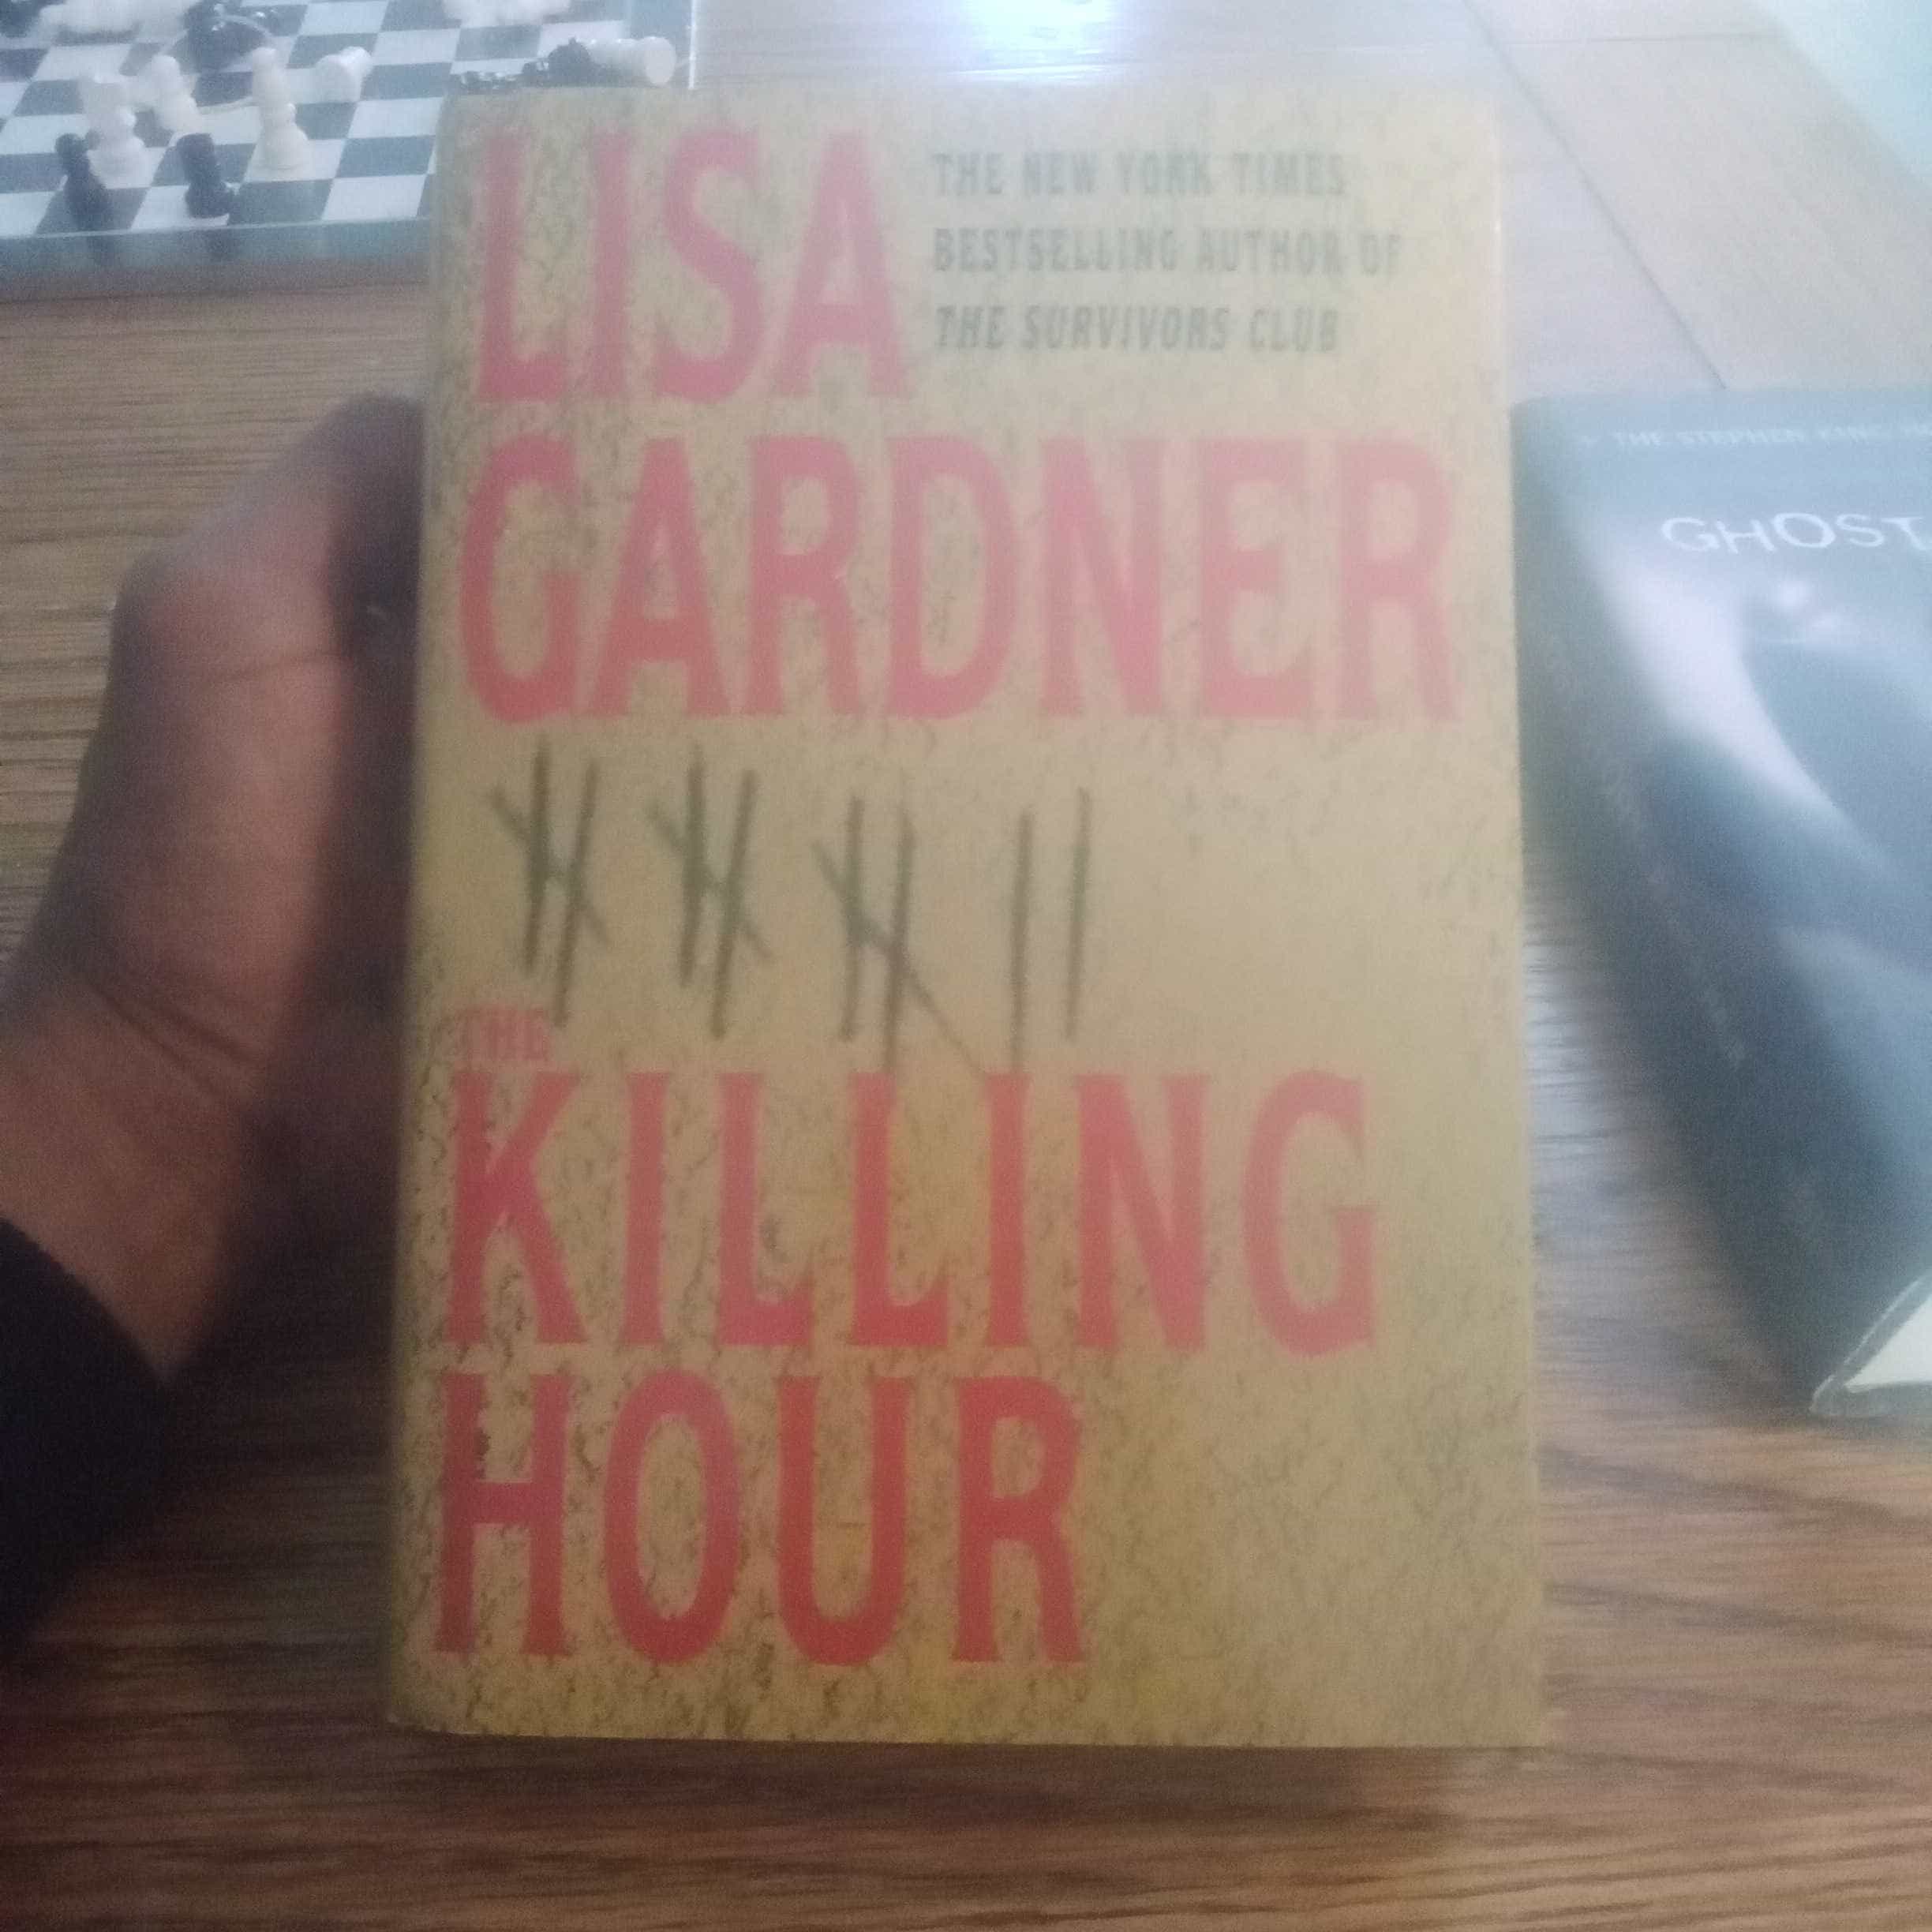 Libro de segunda mano: The killing hour